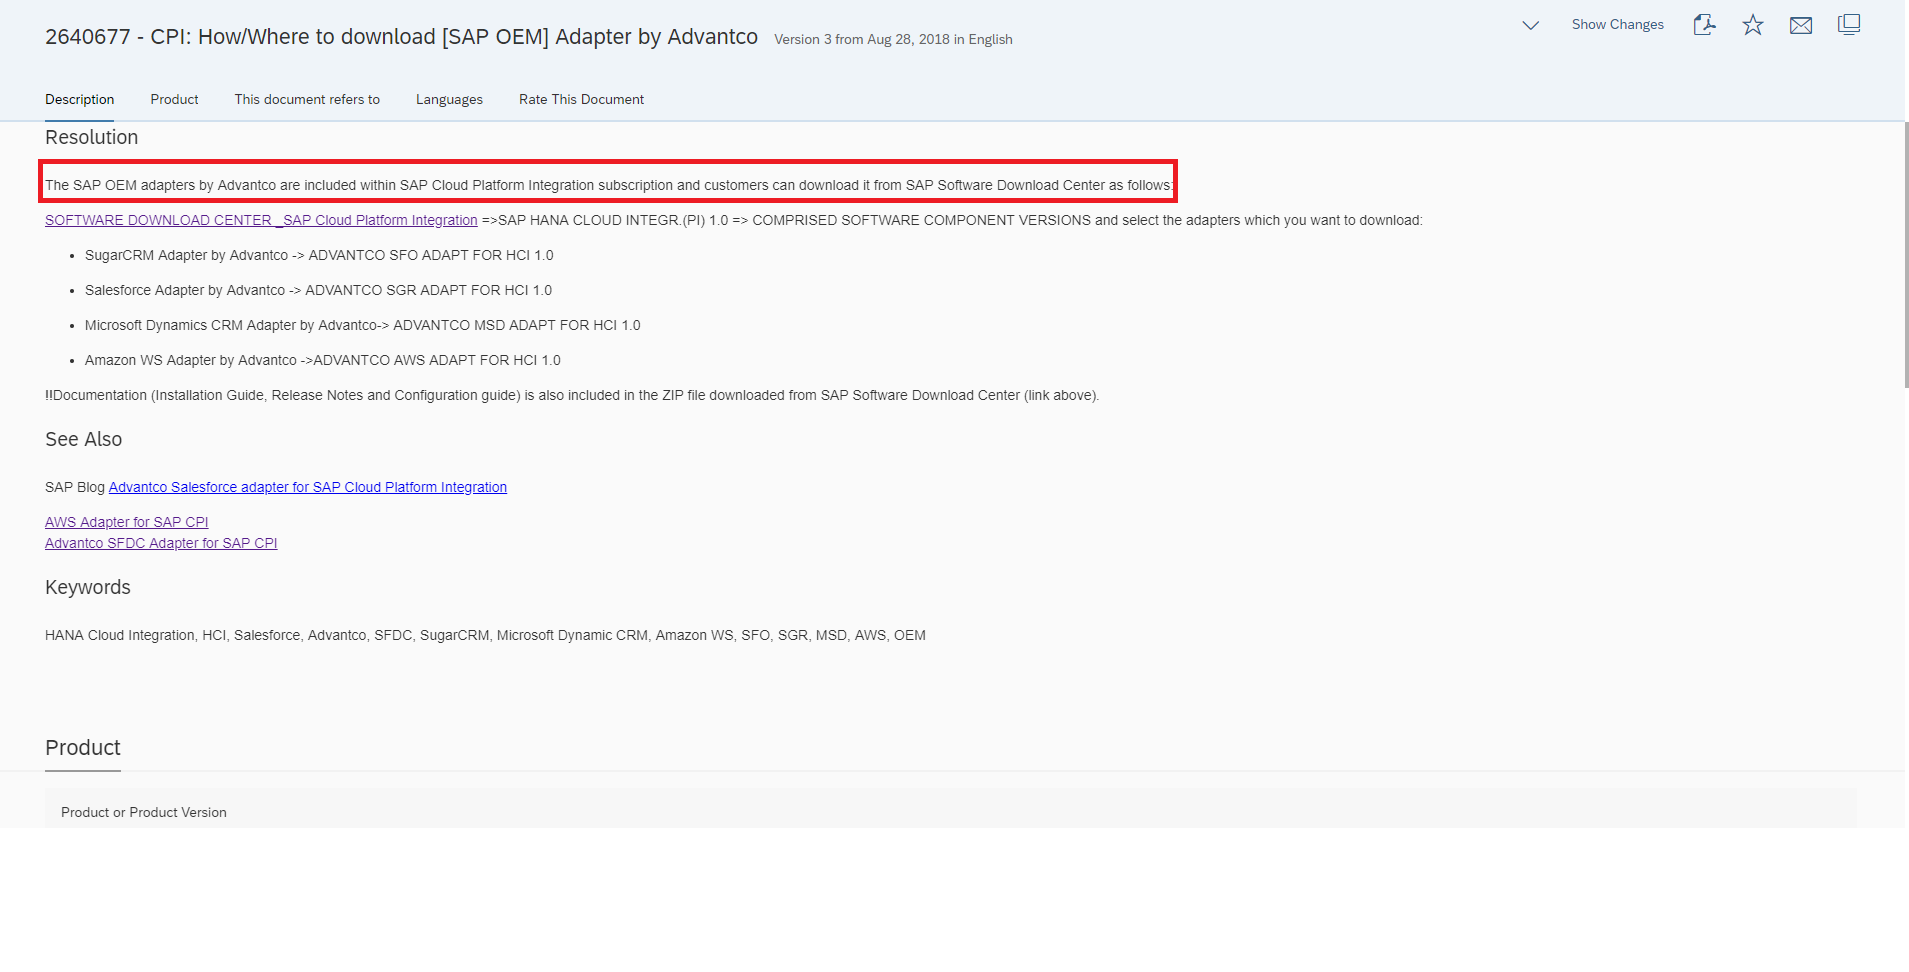 Advantco Adapter-Amazon S3 Integration made simple with SAP CPI